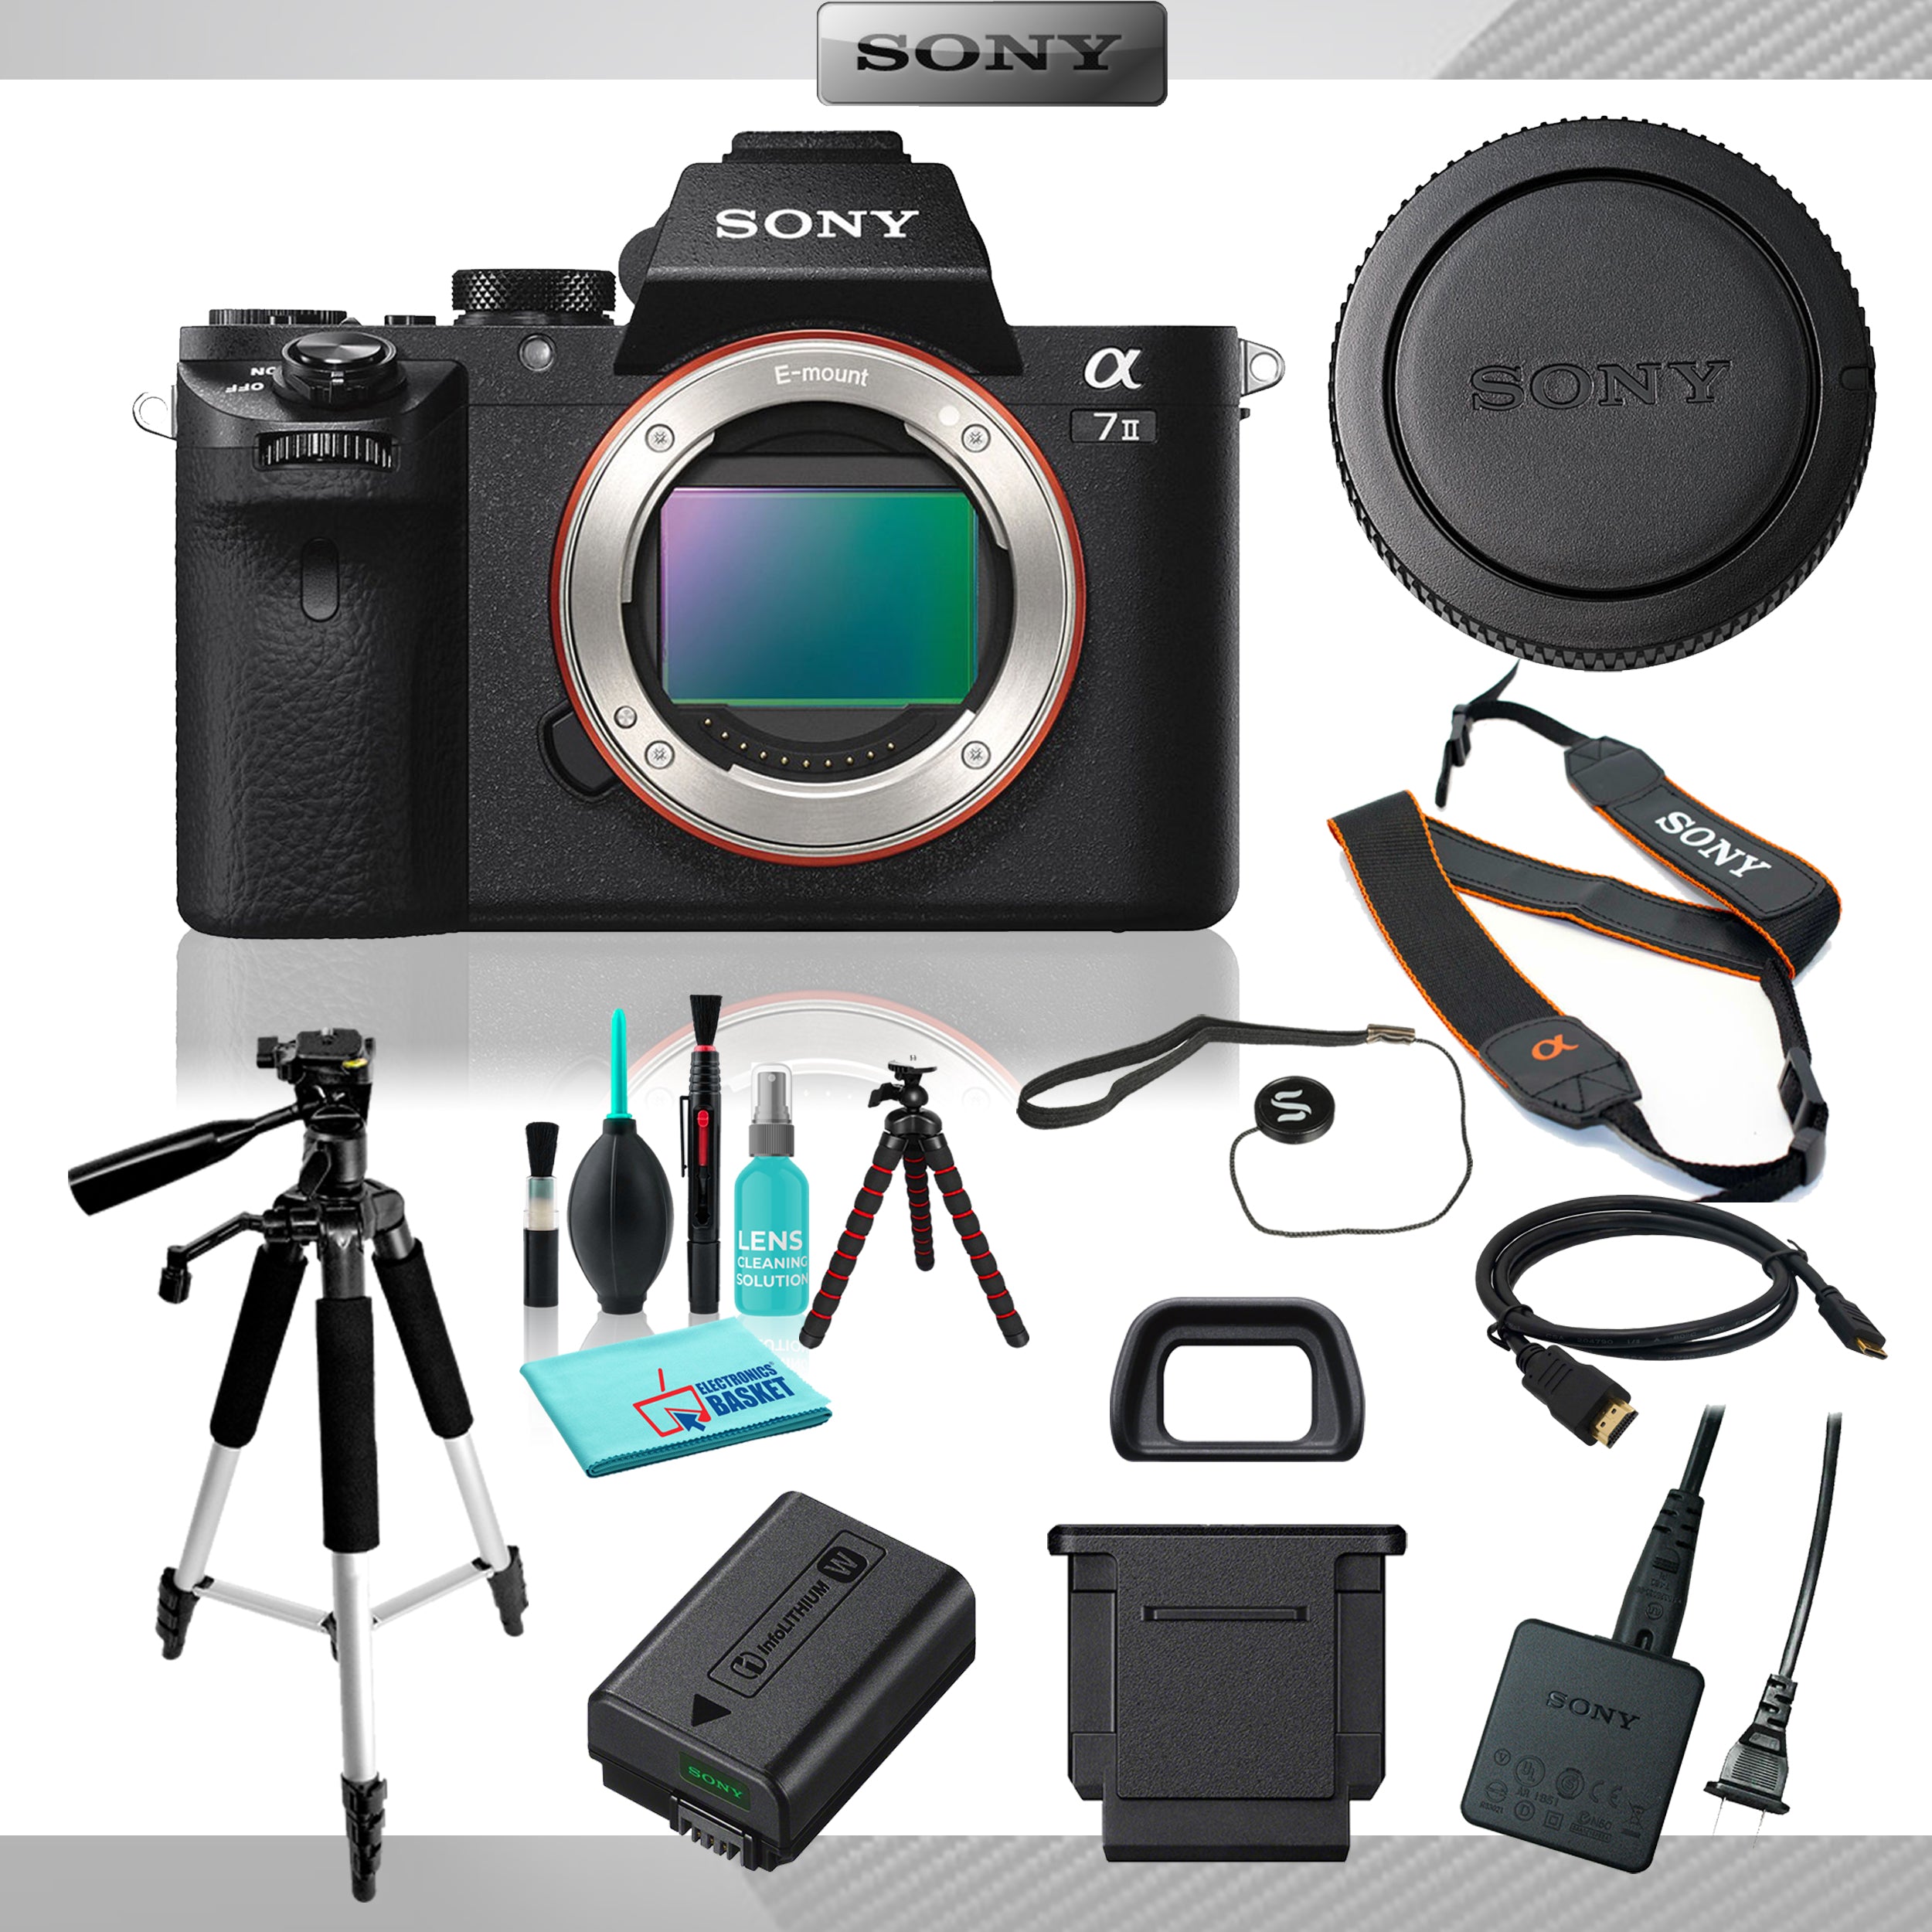 Sony Alpha a7 II Mirrorless Digital Camera (Body Only), 24.3MP Full-Frame Exmor CMOS Sensor w/ 5 Piece Accessories